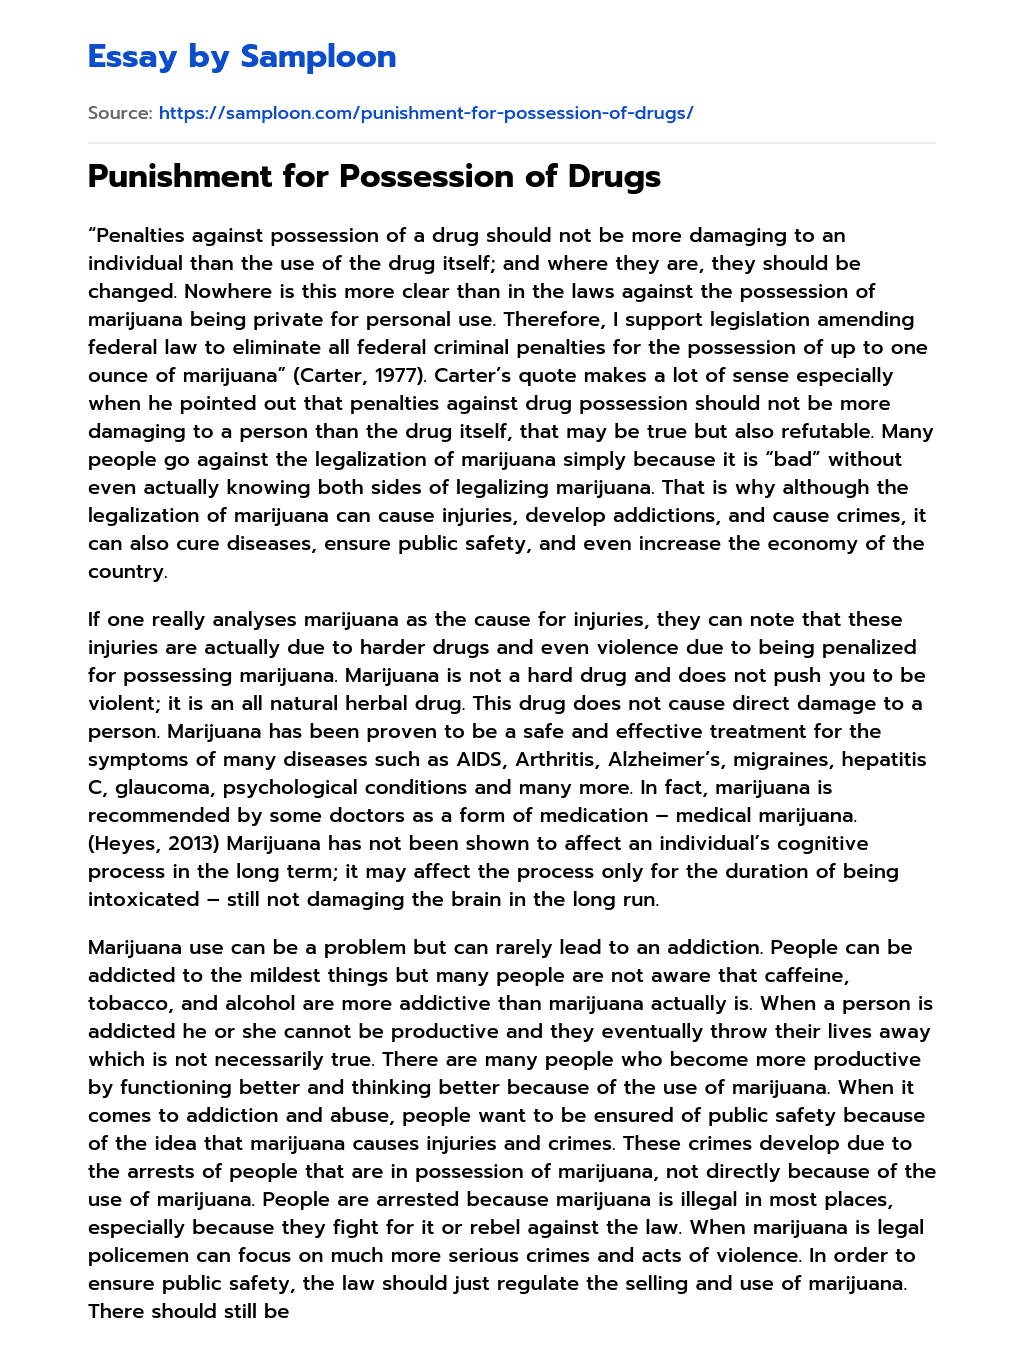 Punishment for Possession of Drugs essay